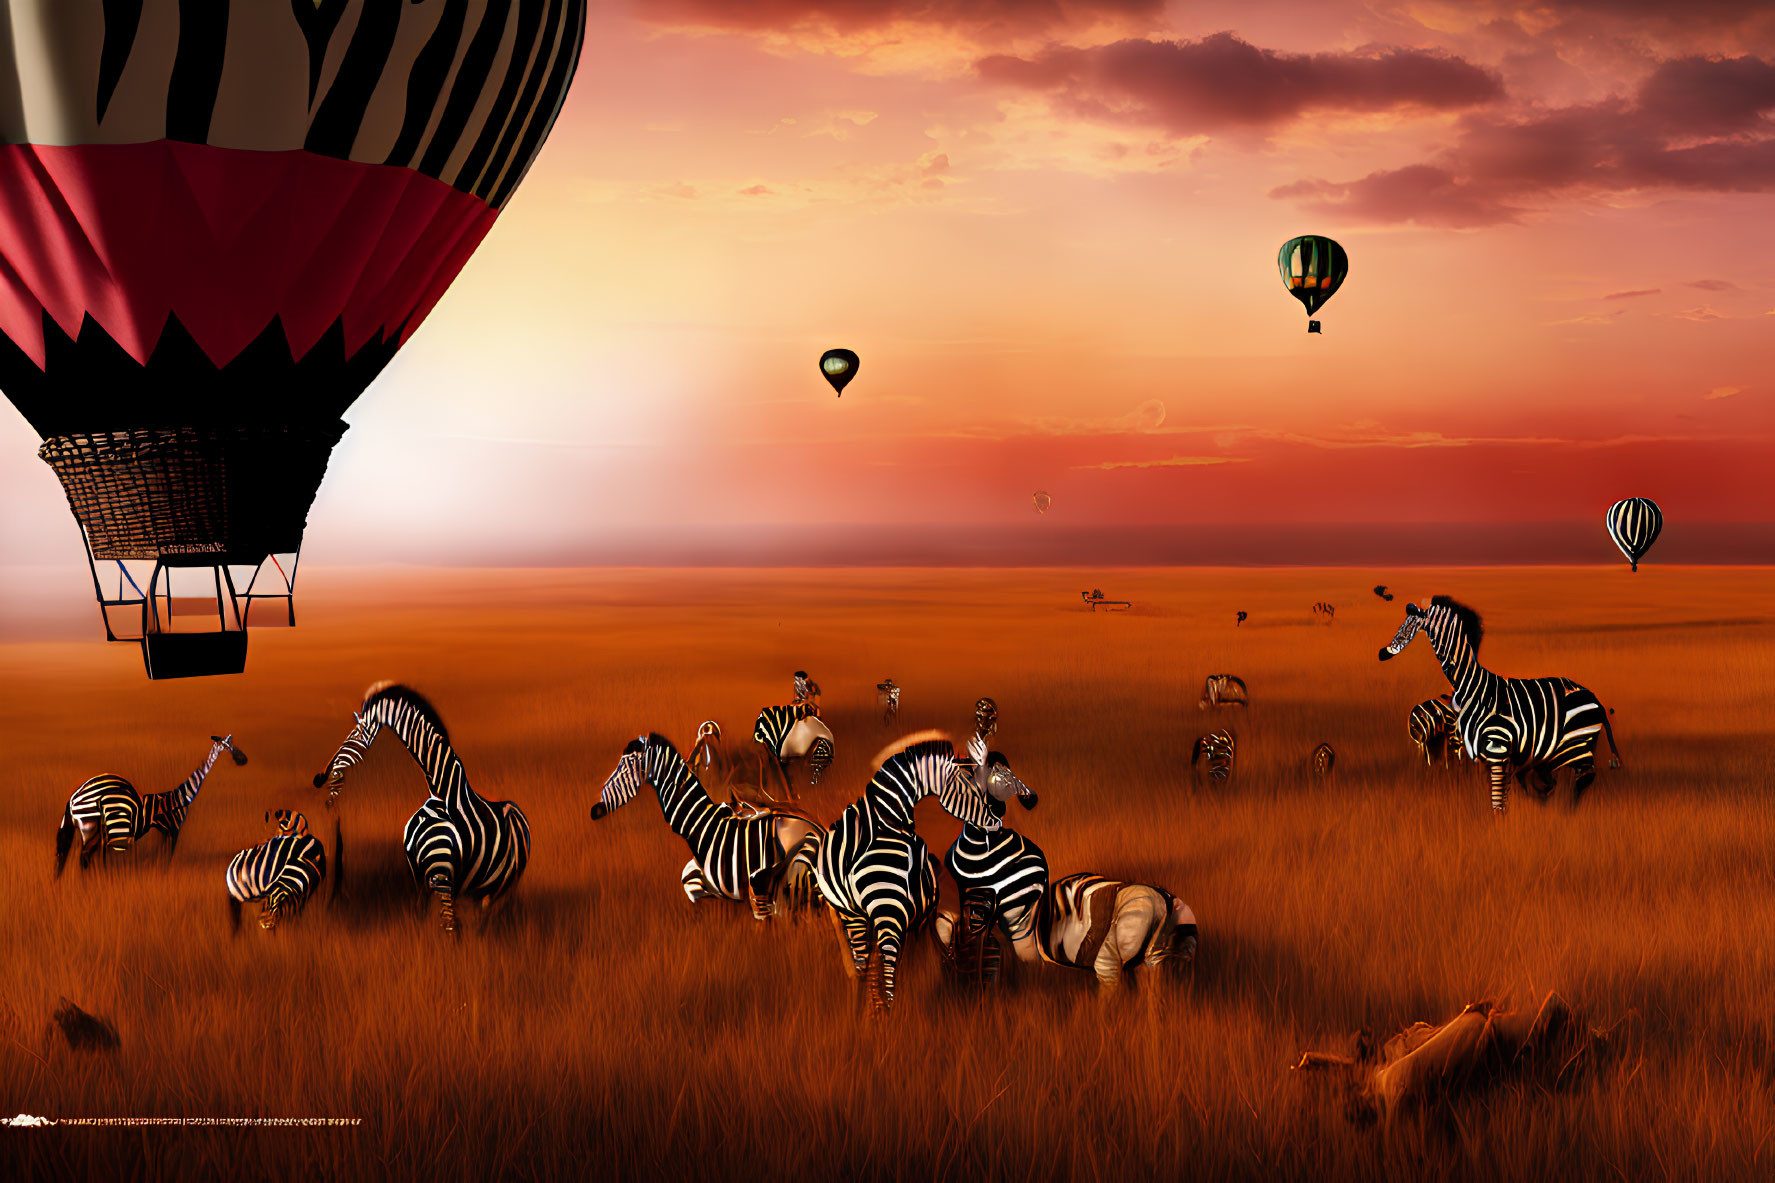 Zebras on orange savannah with hot air balloons at sunset